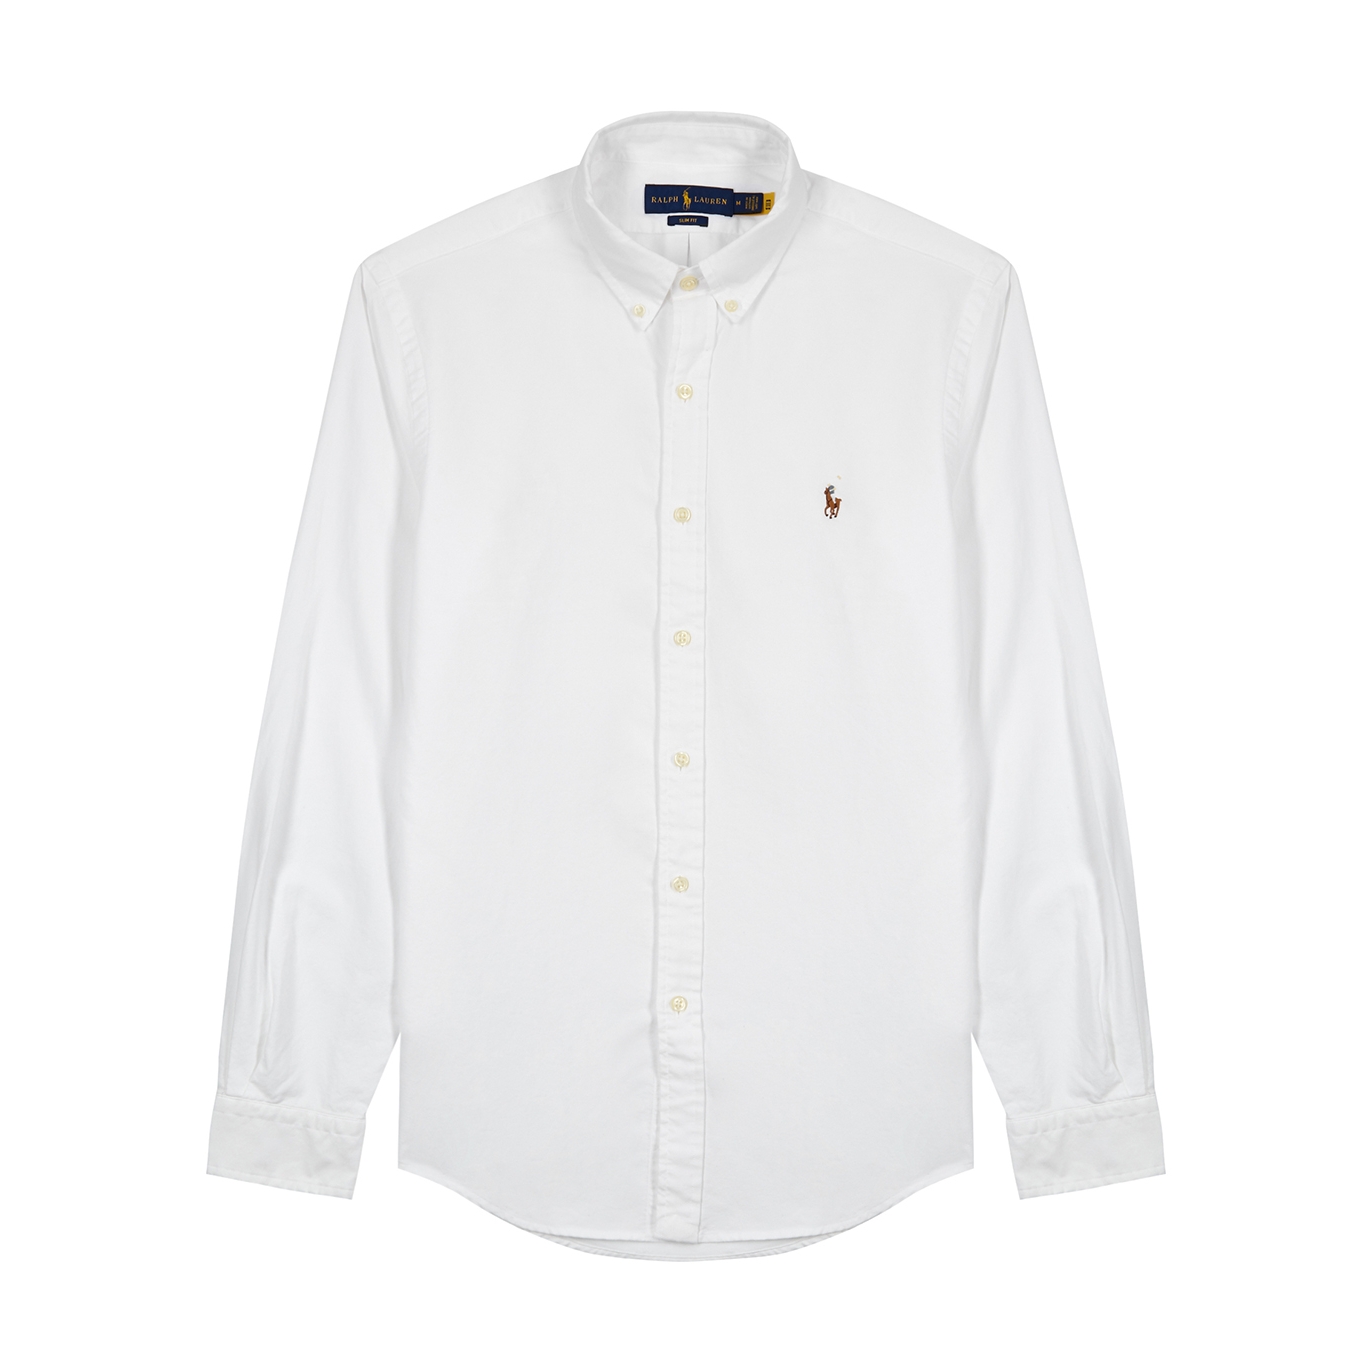 Polo Ralph Lauren White Piqué Cotton Oxford Shirt - XS